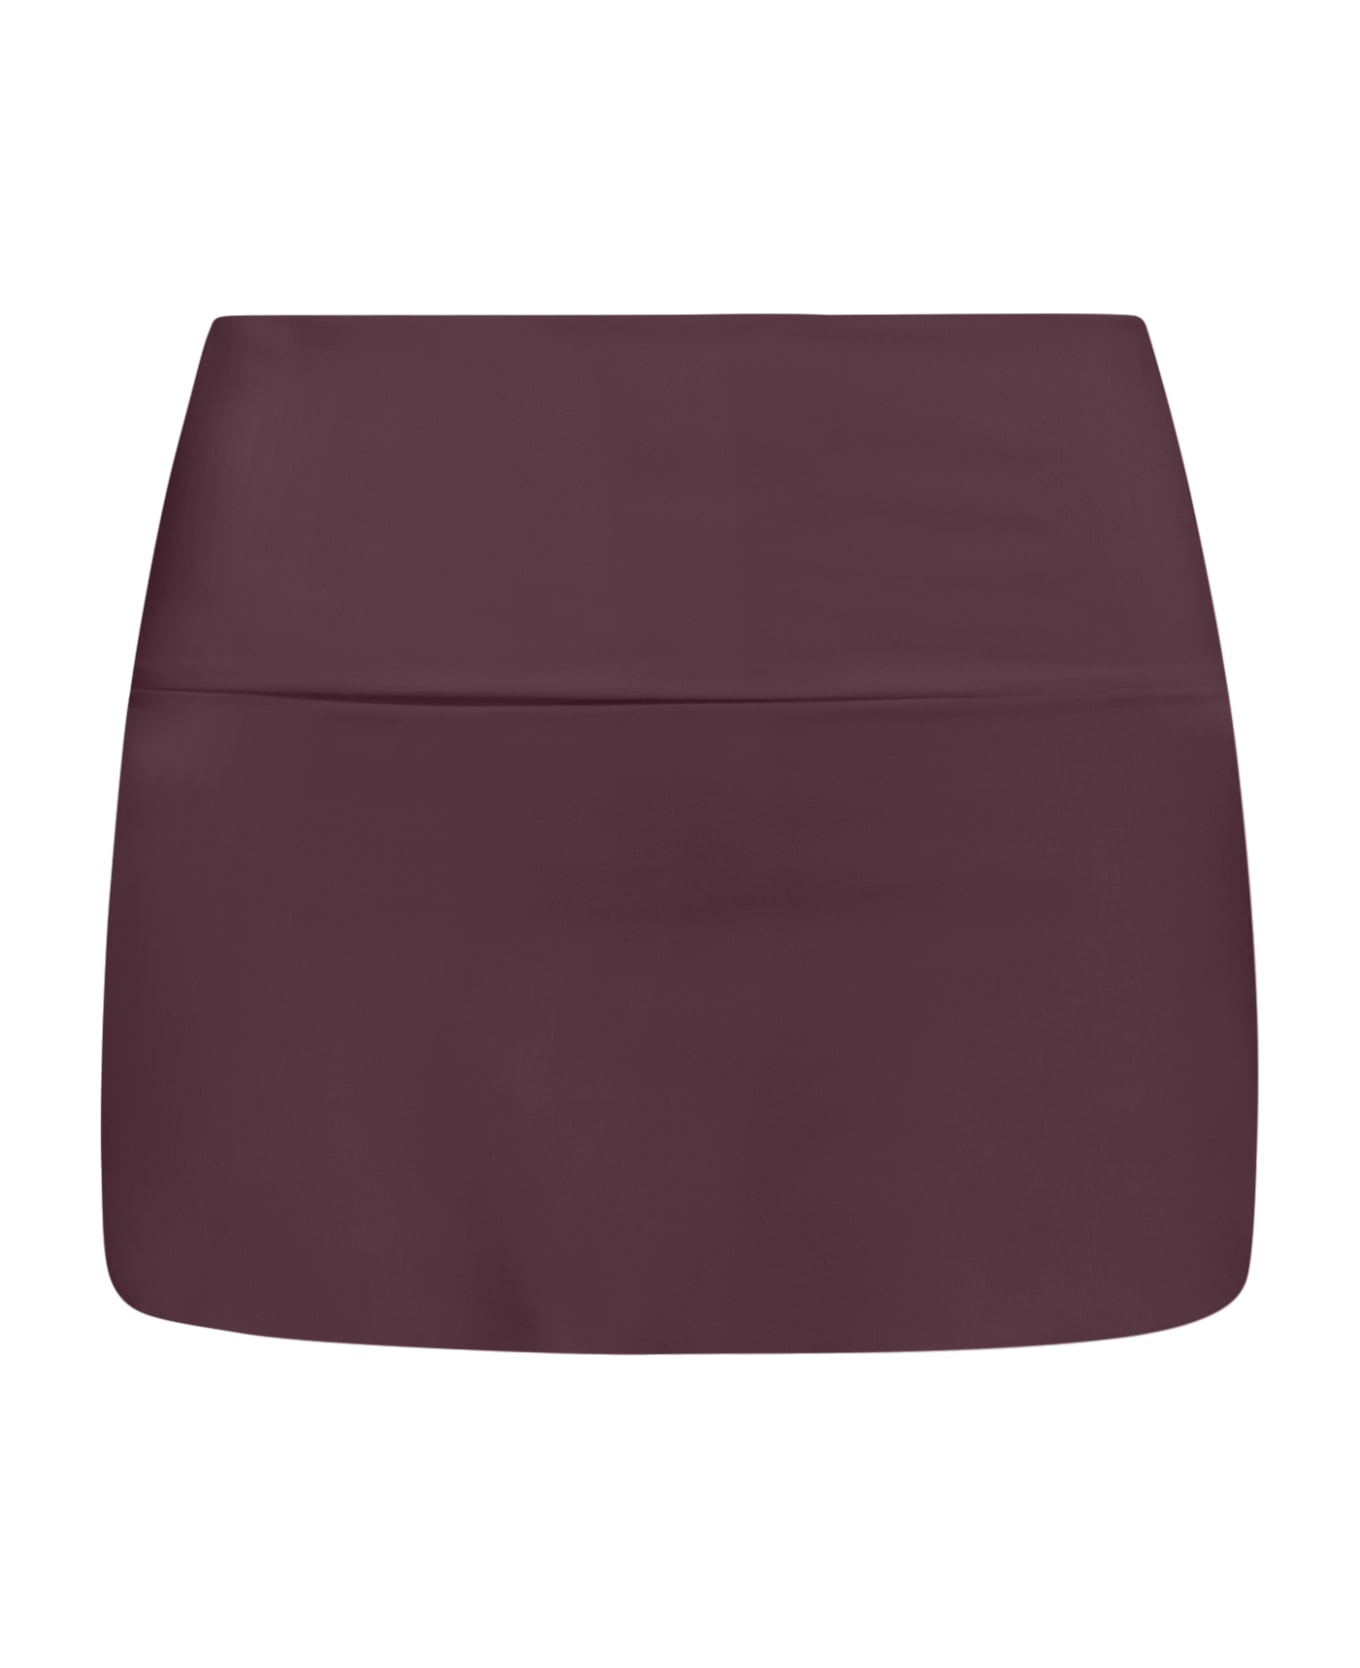 Sucrette Pareo Skirt - Prugna